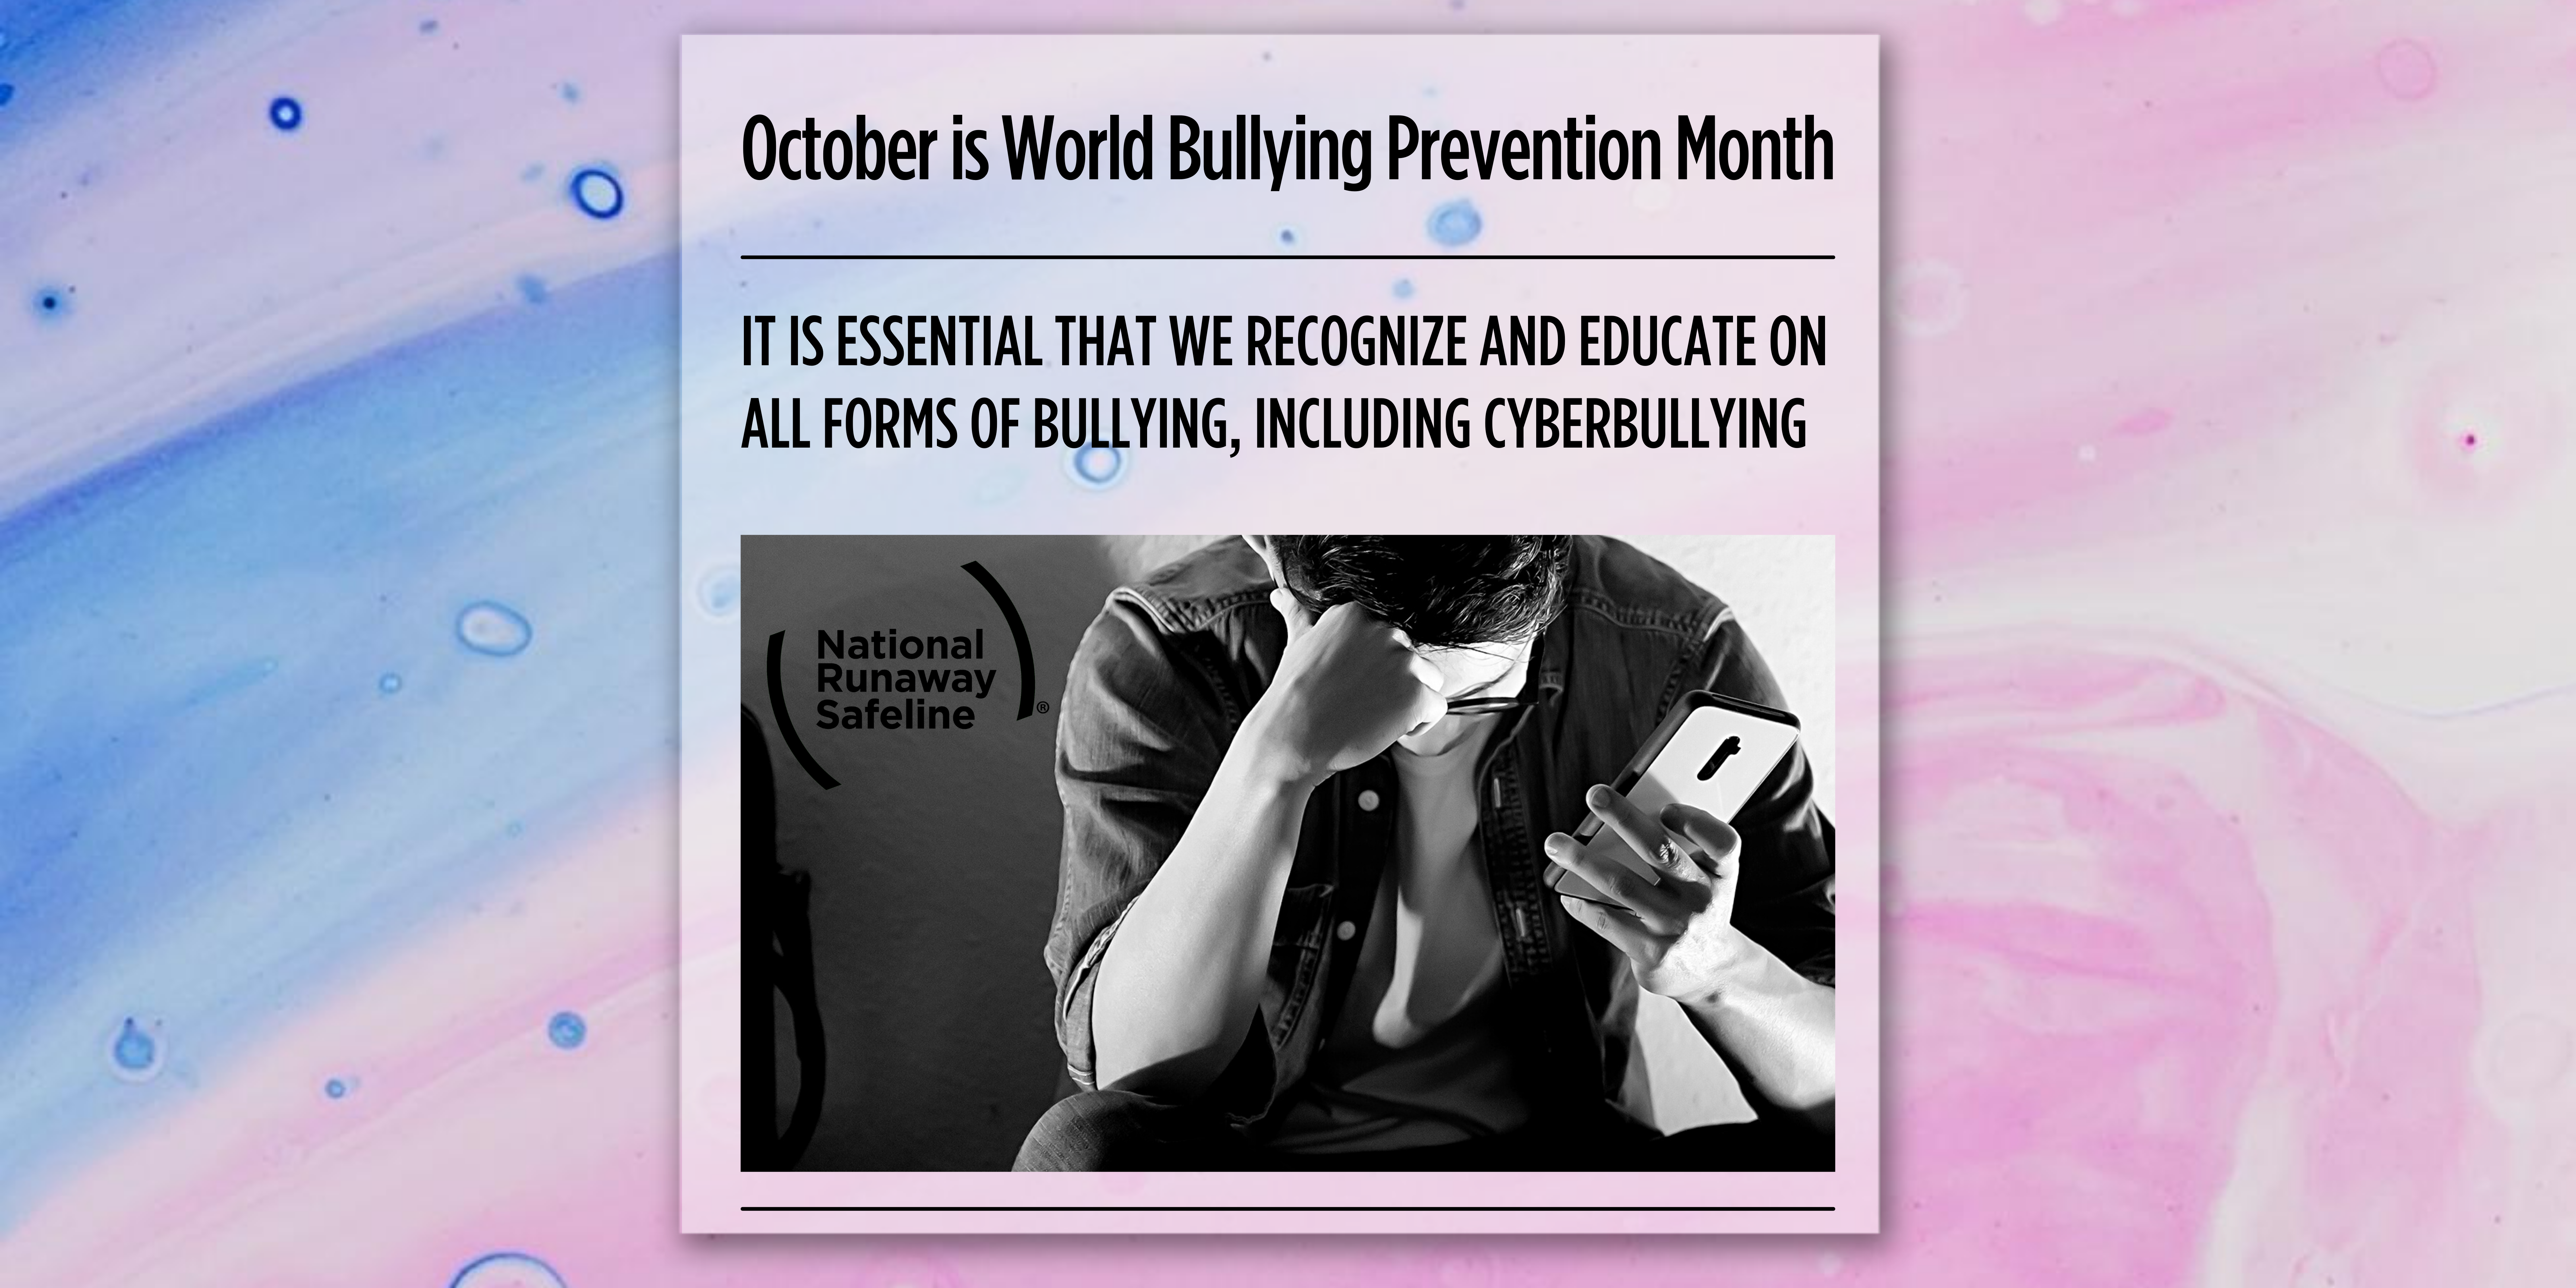 World Bullying Prevention Month: Cyberbullying